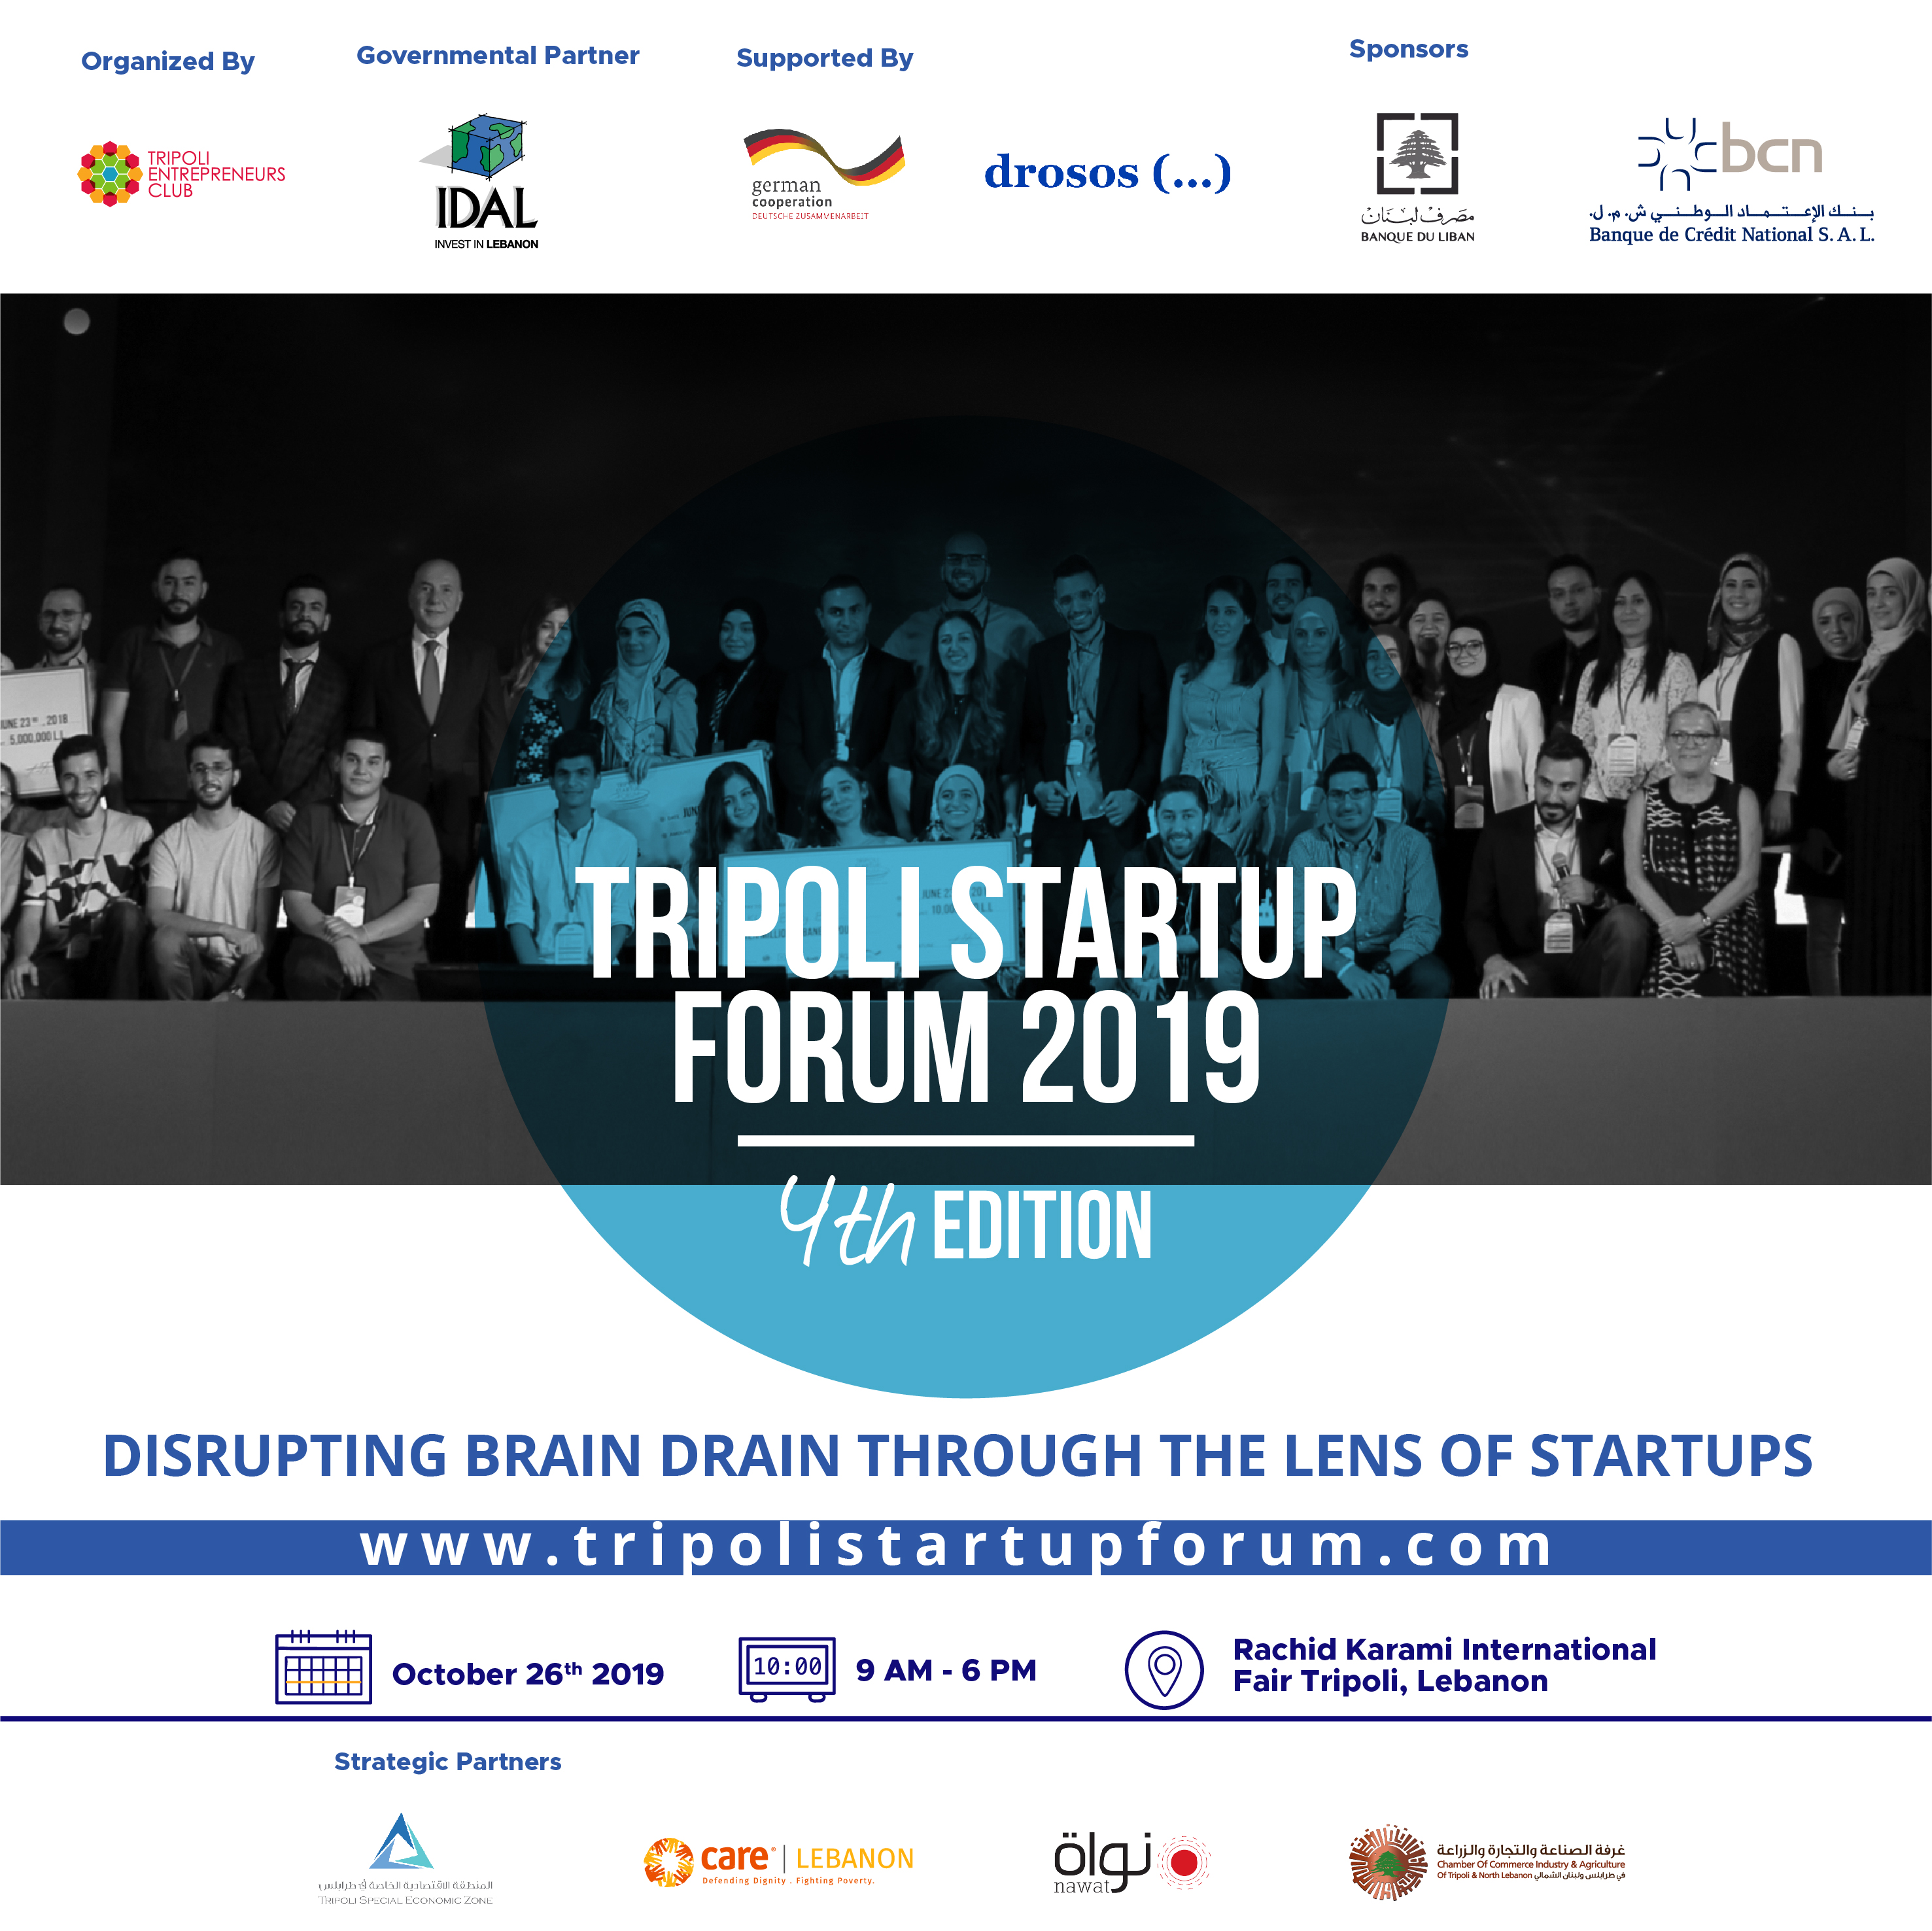 Tripoli Startup Forum